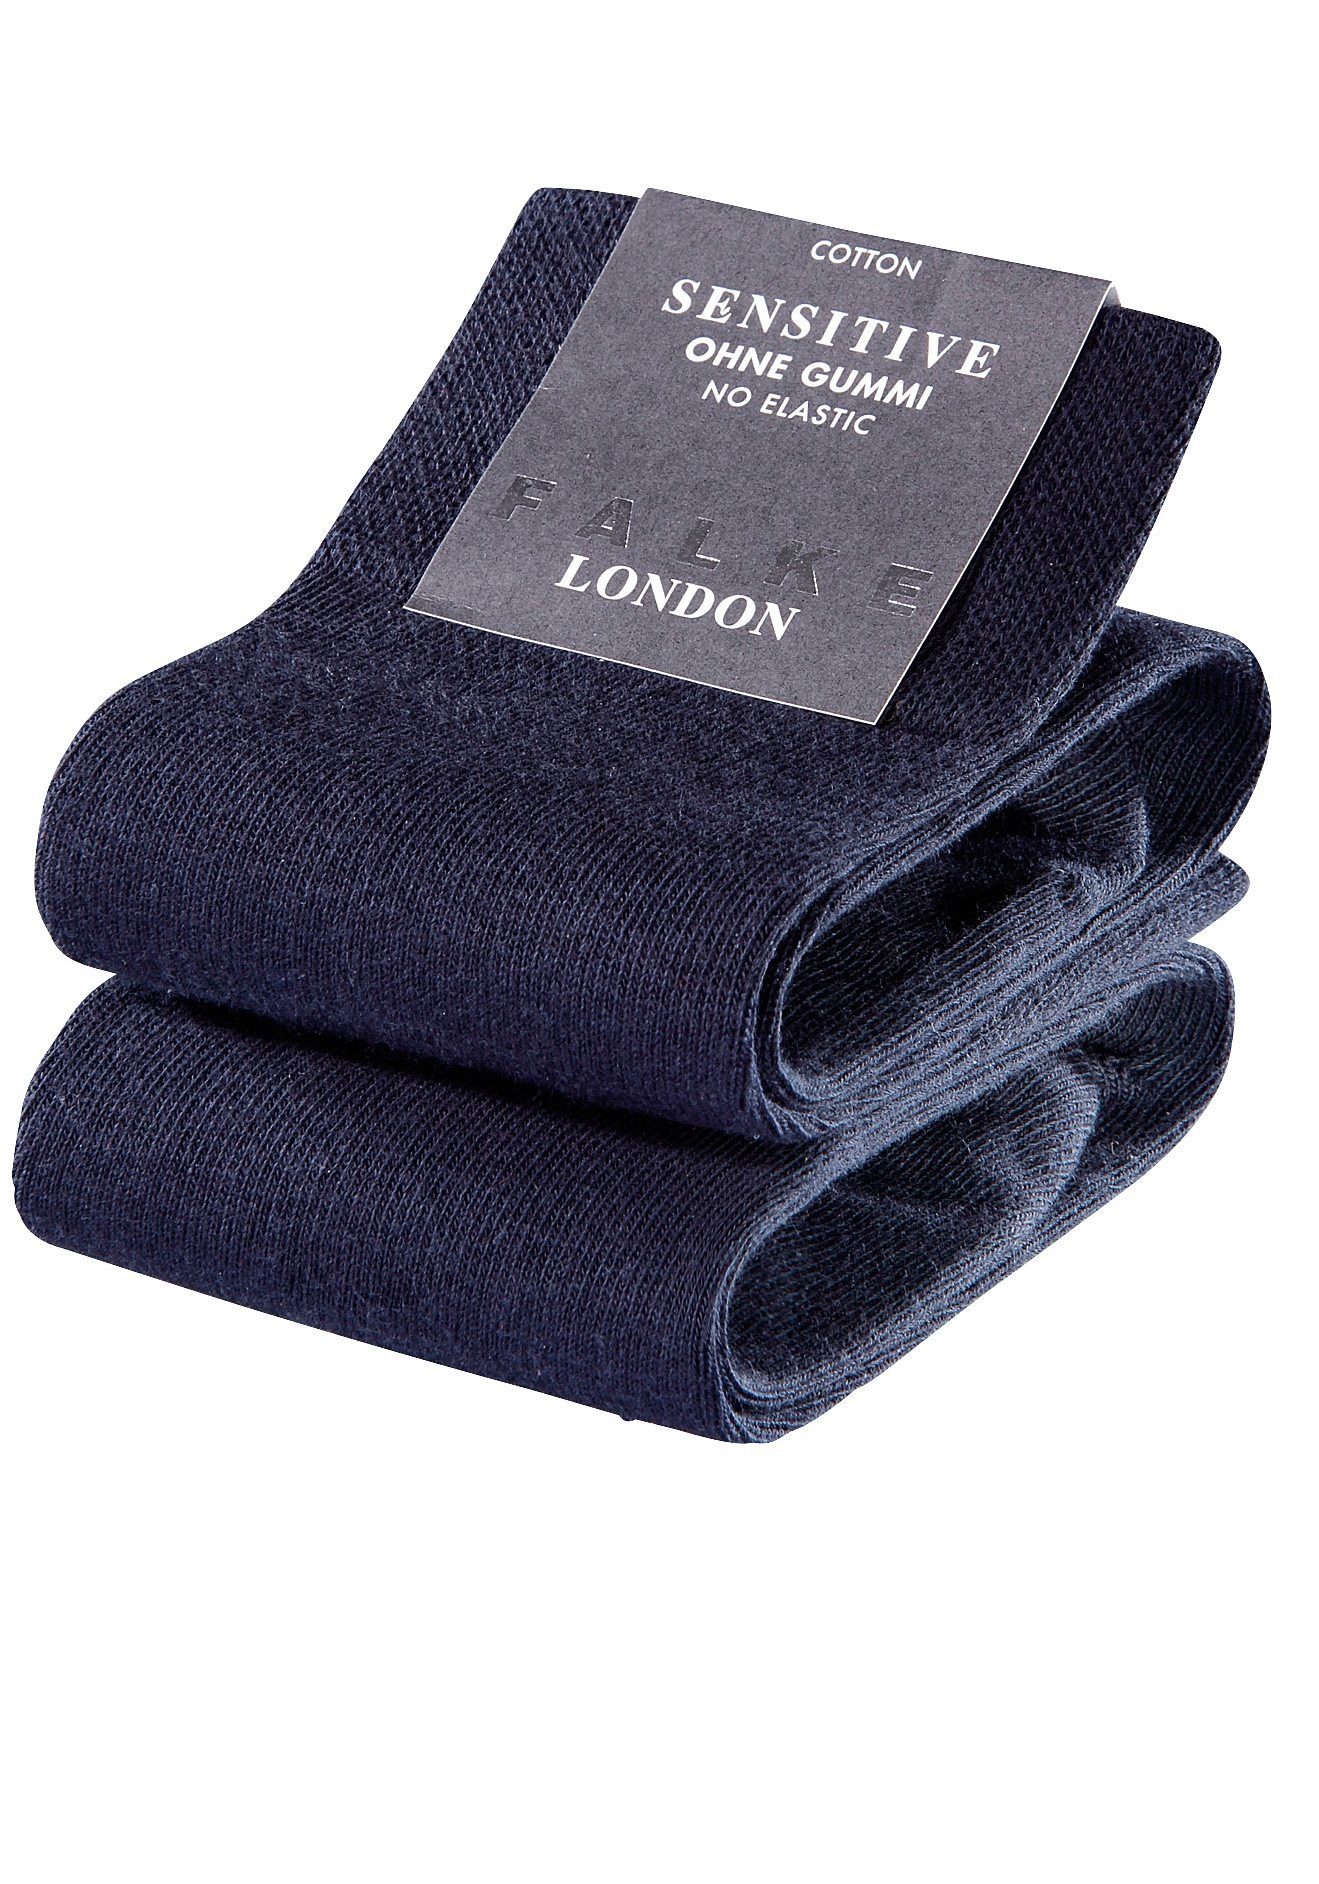 FALKE London sensitve ohne mit (2-Paar) marine Bündchen Socken Sensitive Gummi